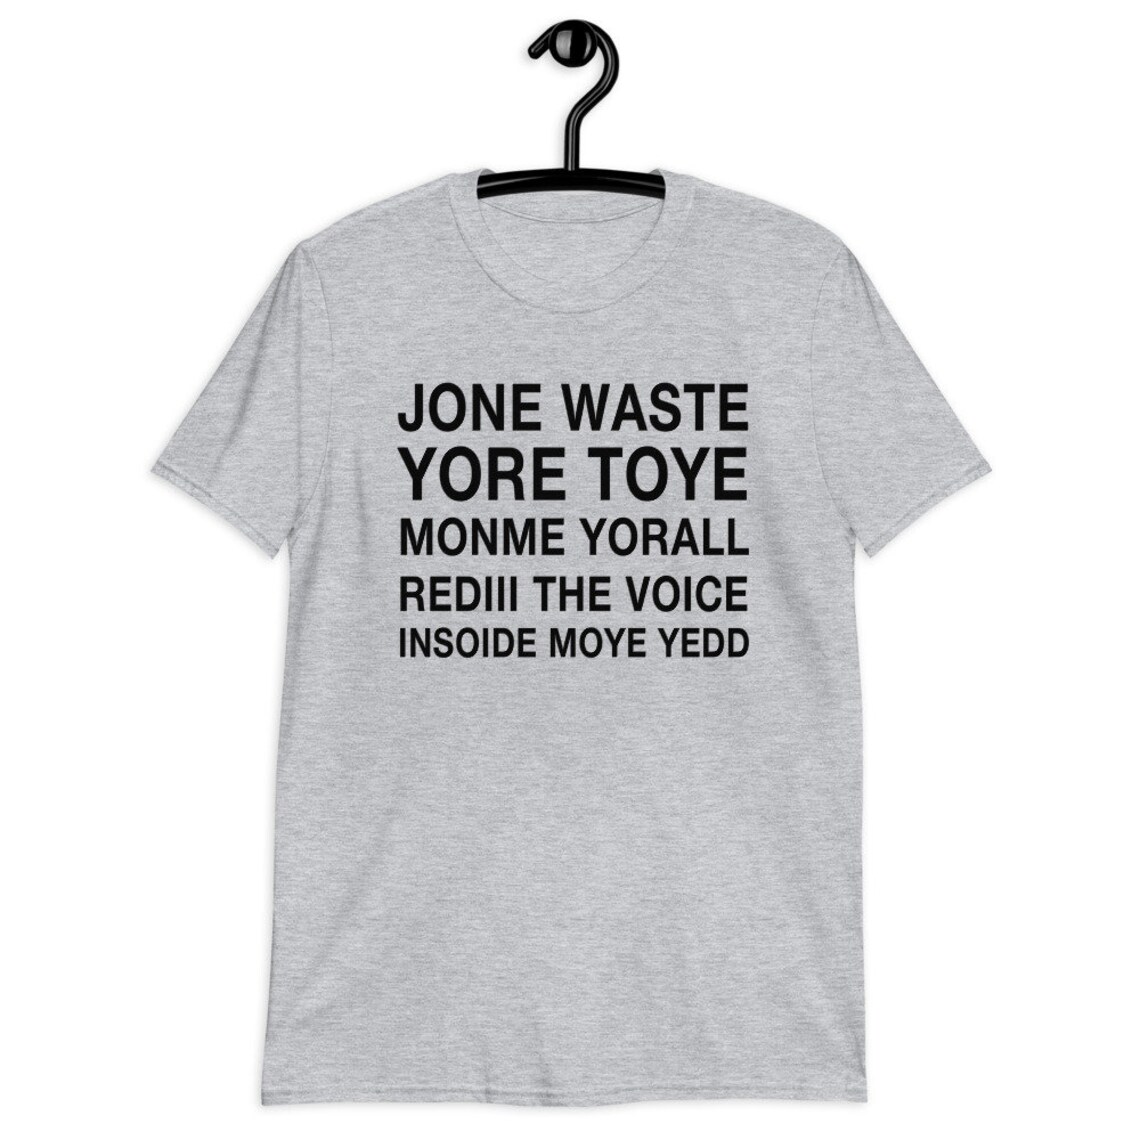 Jone waste yore toye monme yorall rediii jone waste your time | Etsy